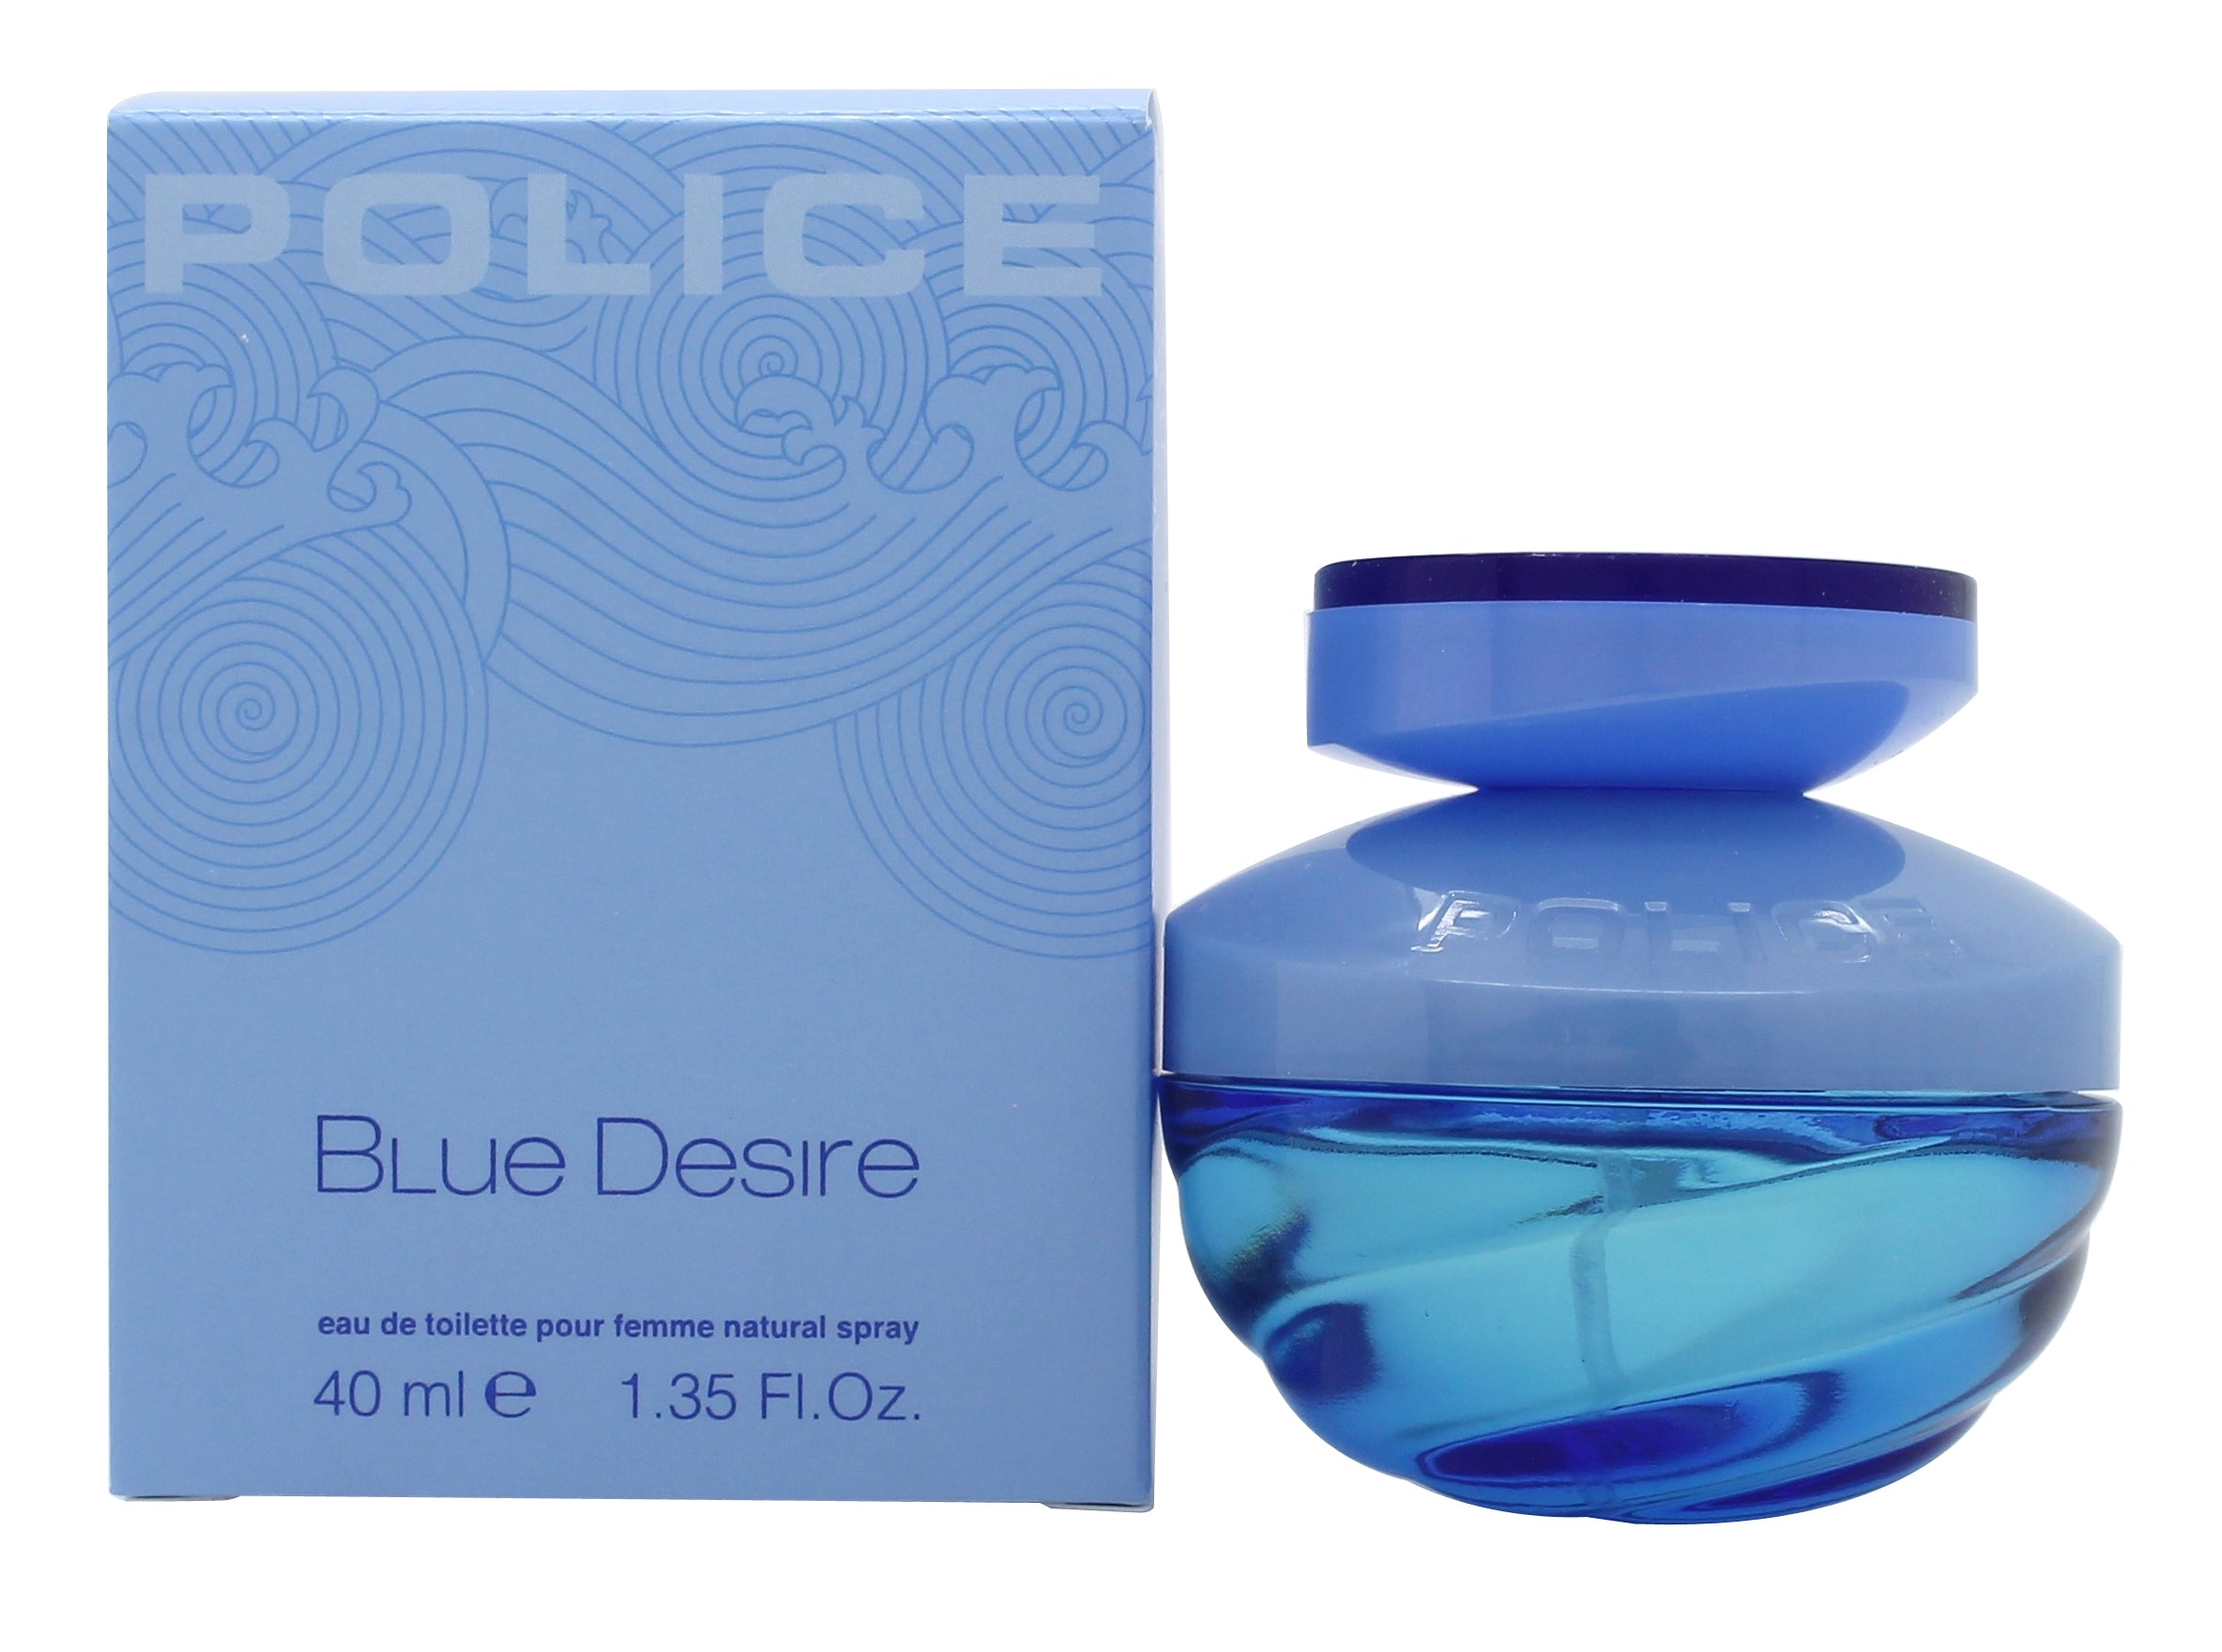 View Police Blue Desire Eau de Toilette 40ml Spray information